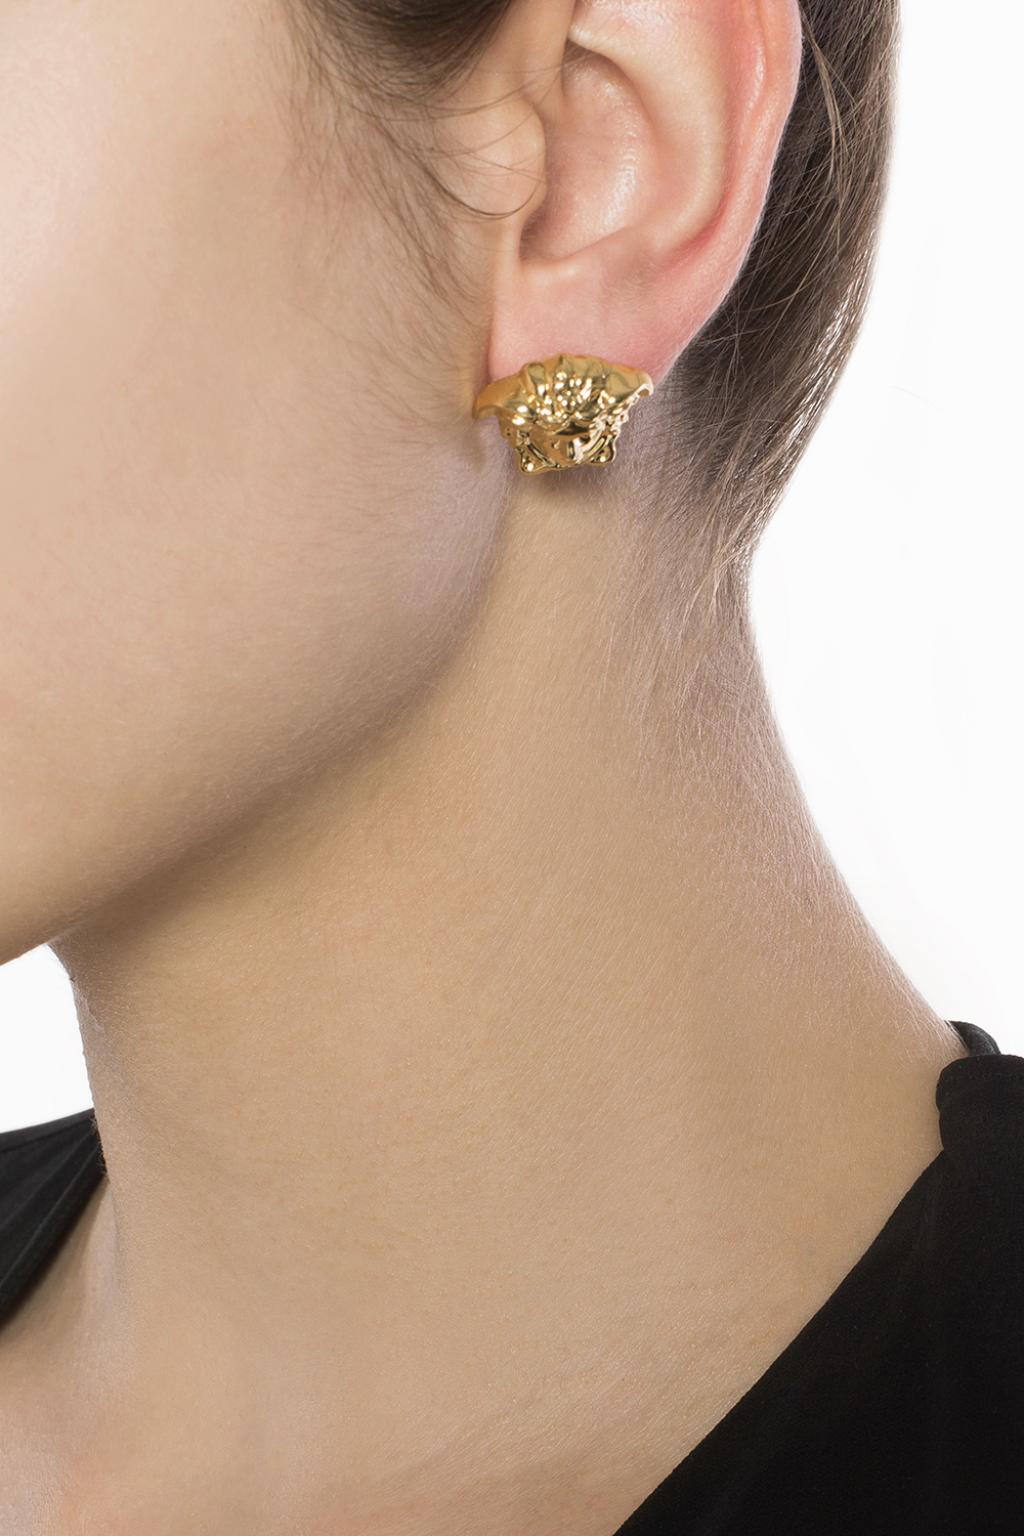 medusa head earrings